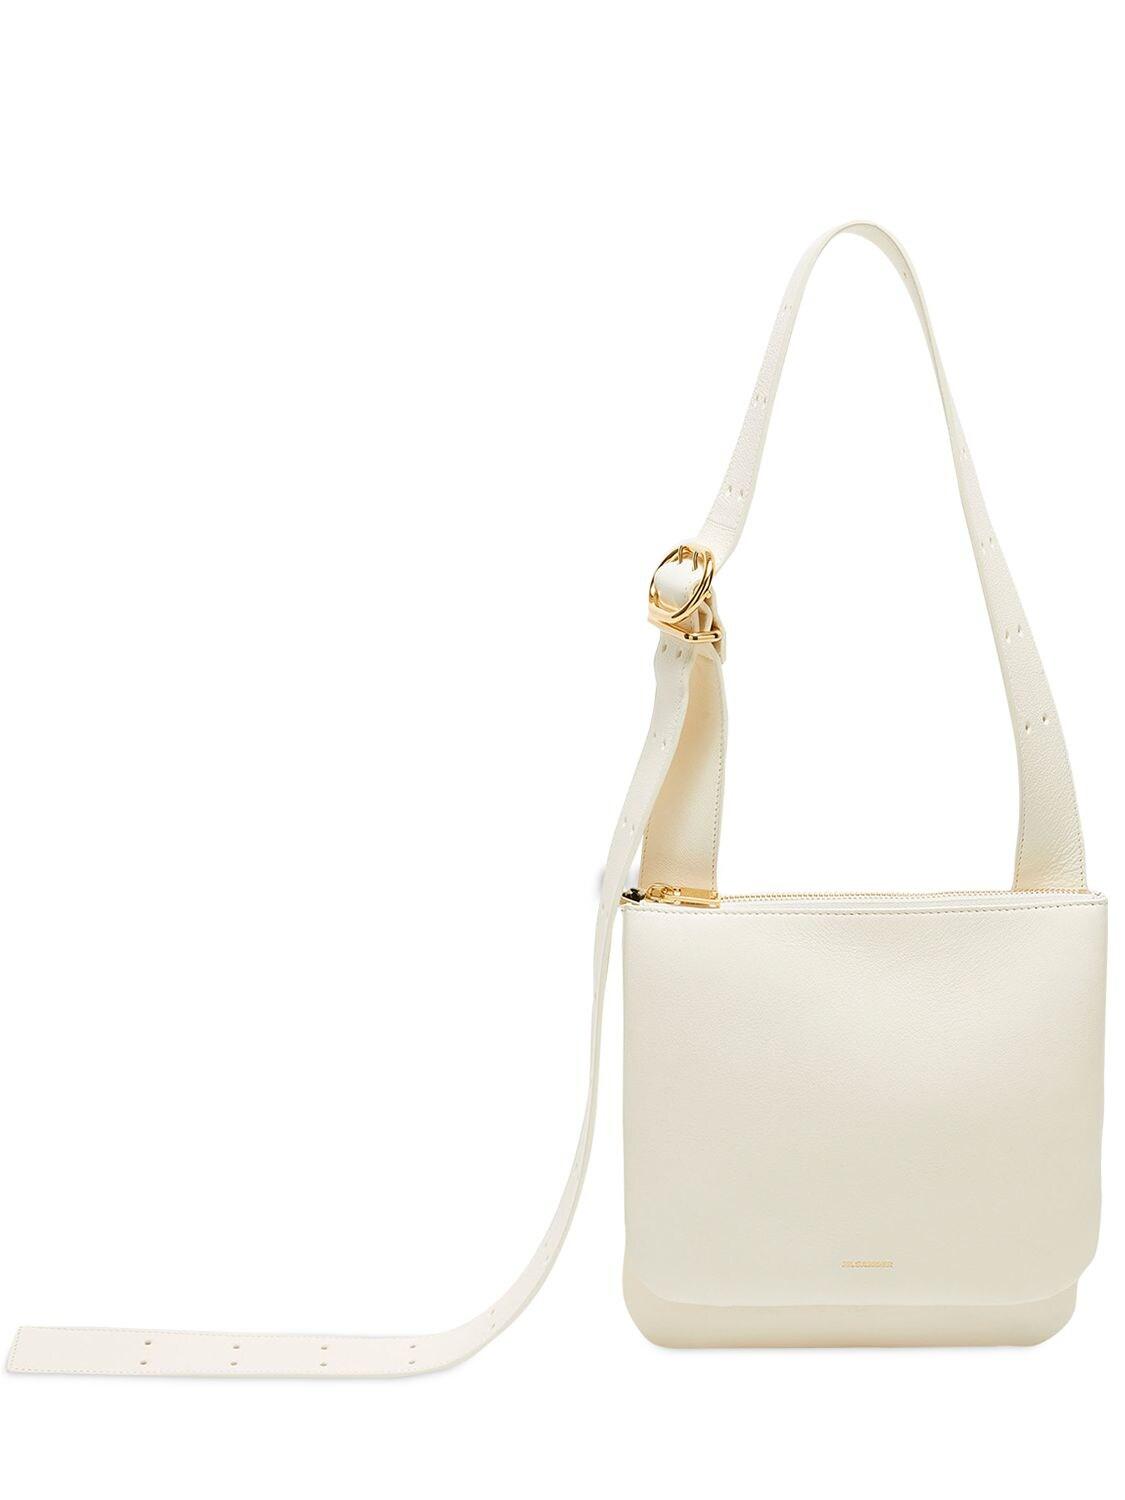 Jil Sander Ombra Ns Leather Shoulder Bag in White | Lyst Australia